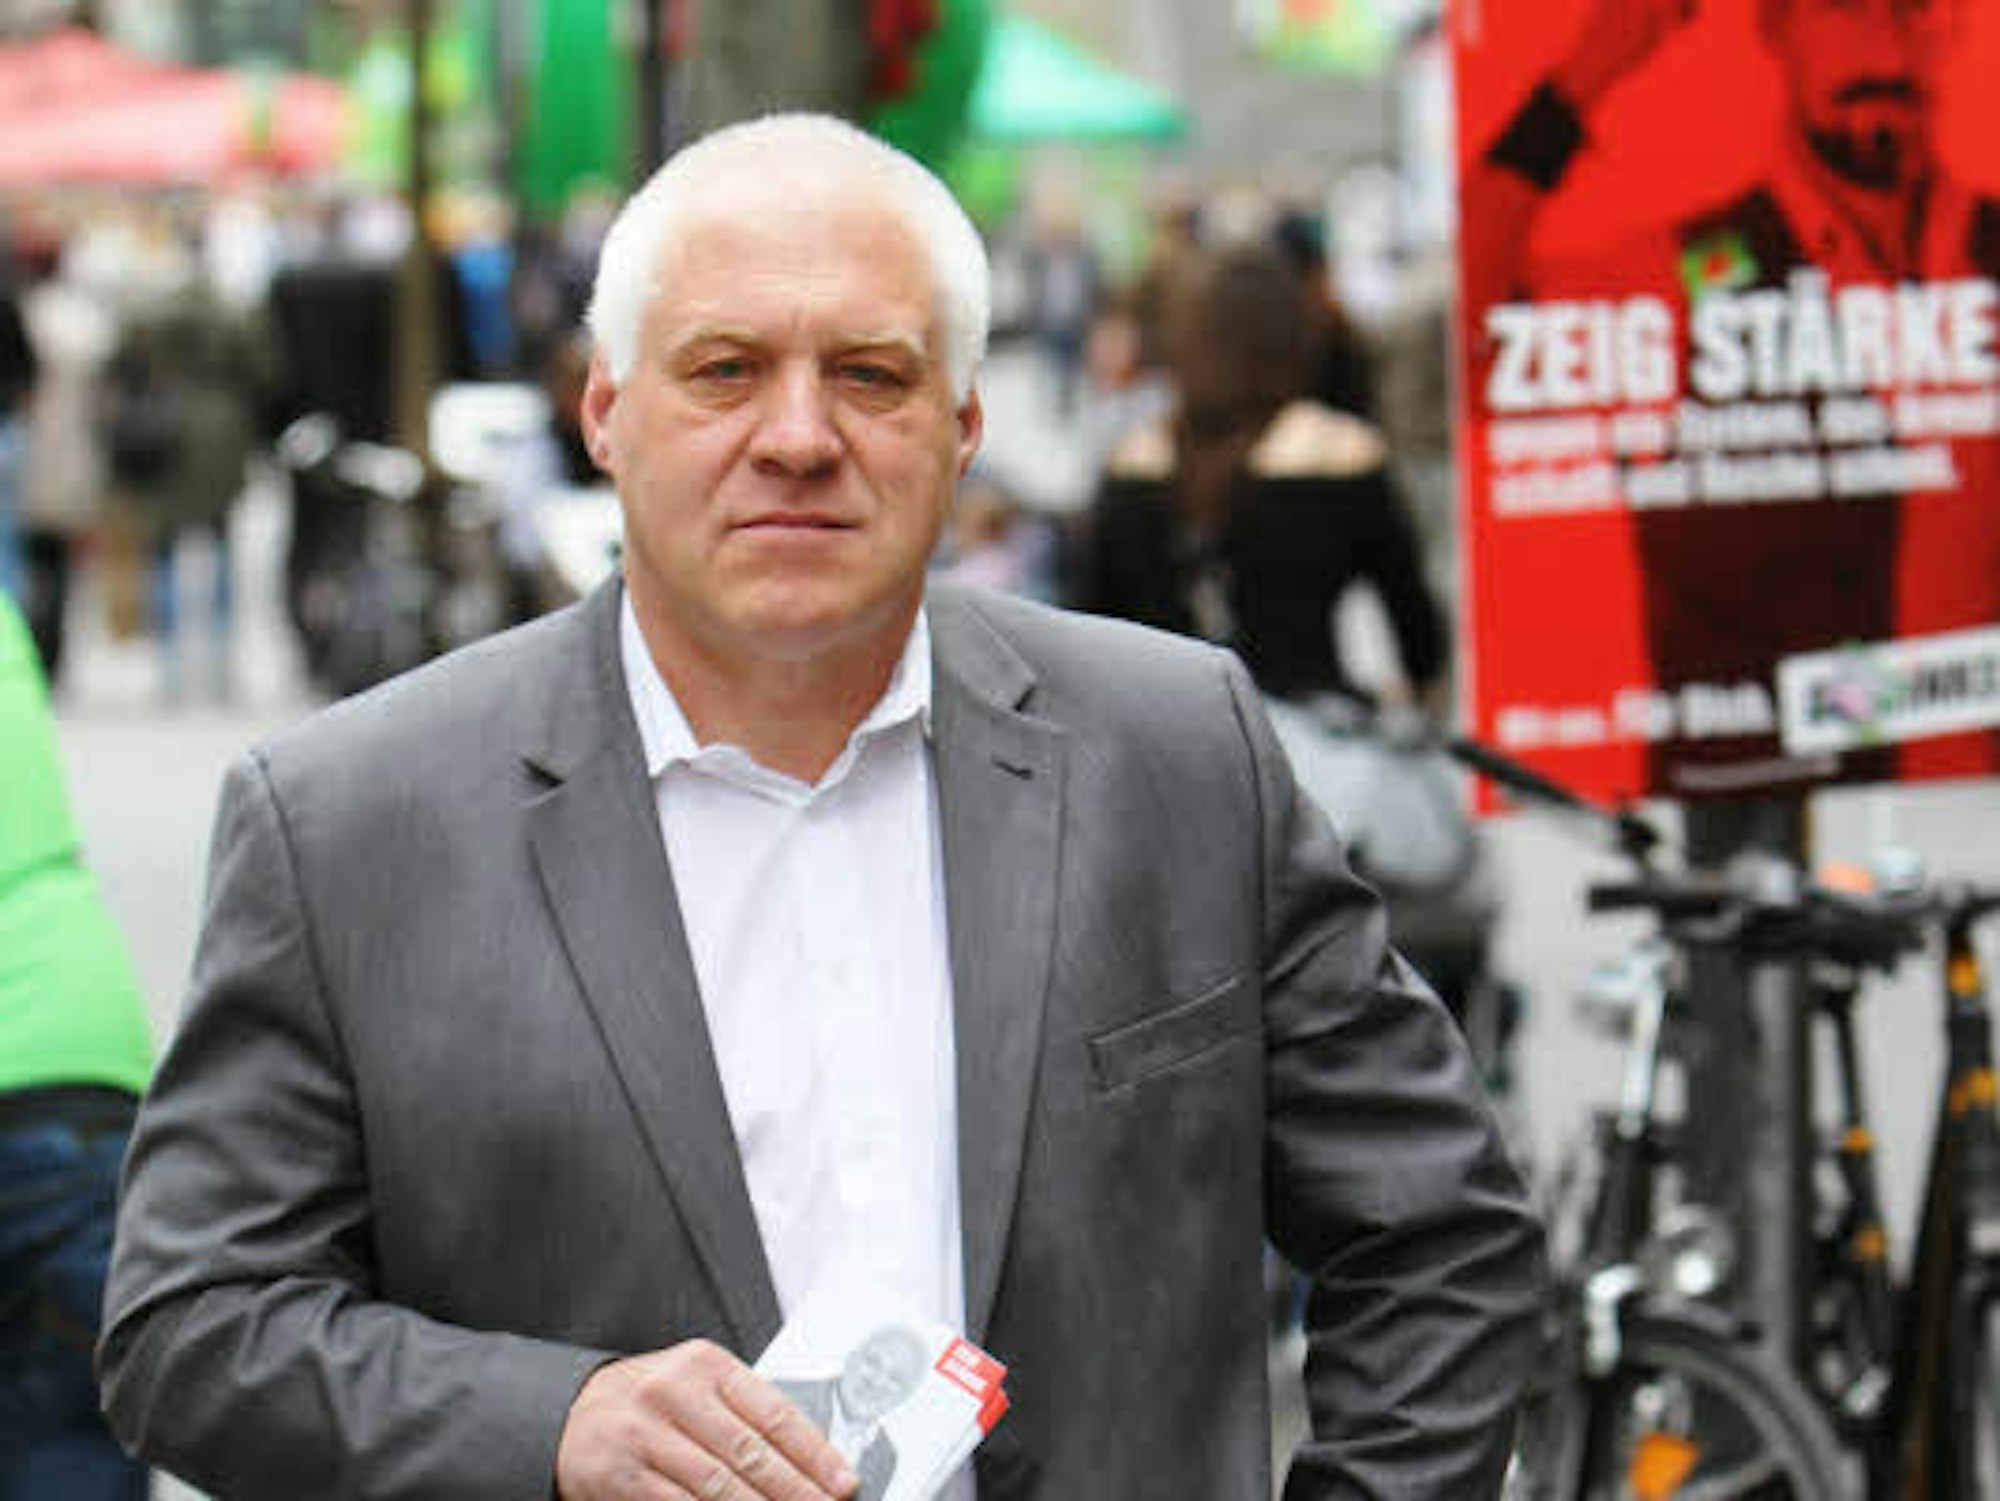 Landtagskandidat Kalle Gerigk beim Wahlkampf.